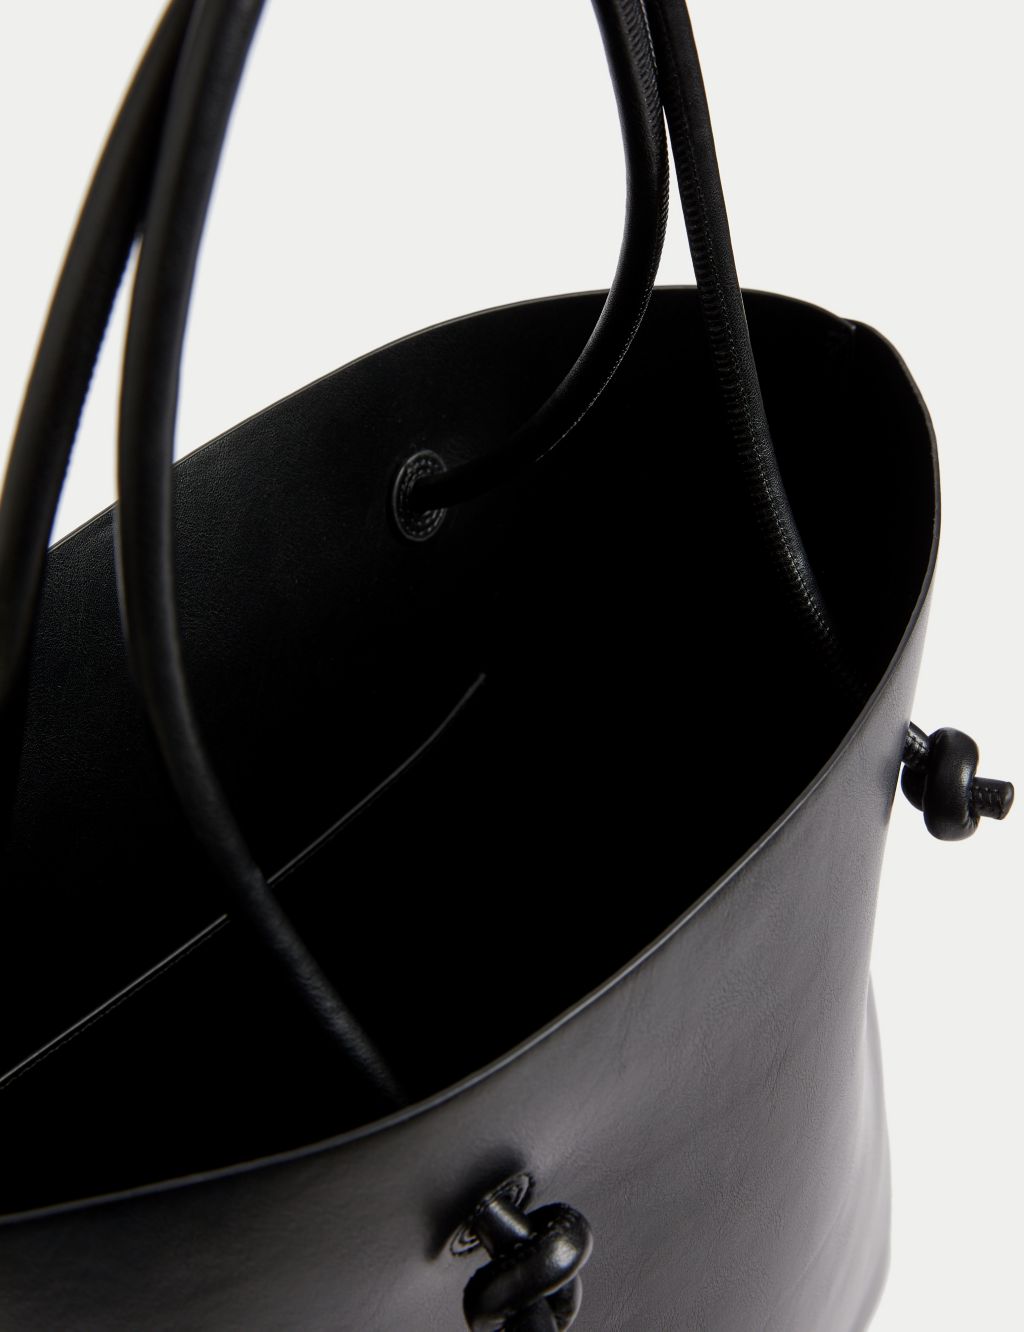 Marks & Spencer Croc Effect Tote Bag Faux leather (FEMALE, BLACK)